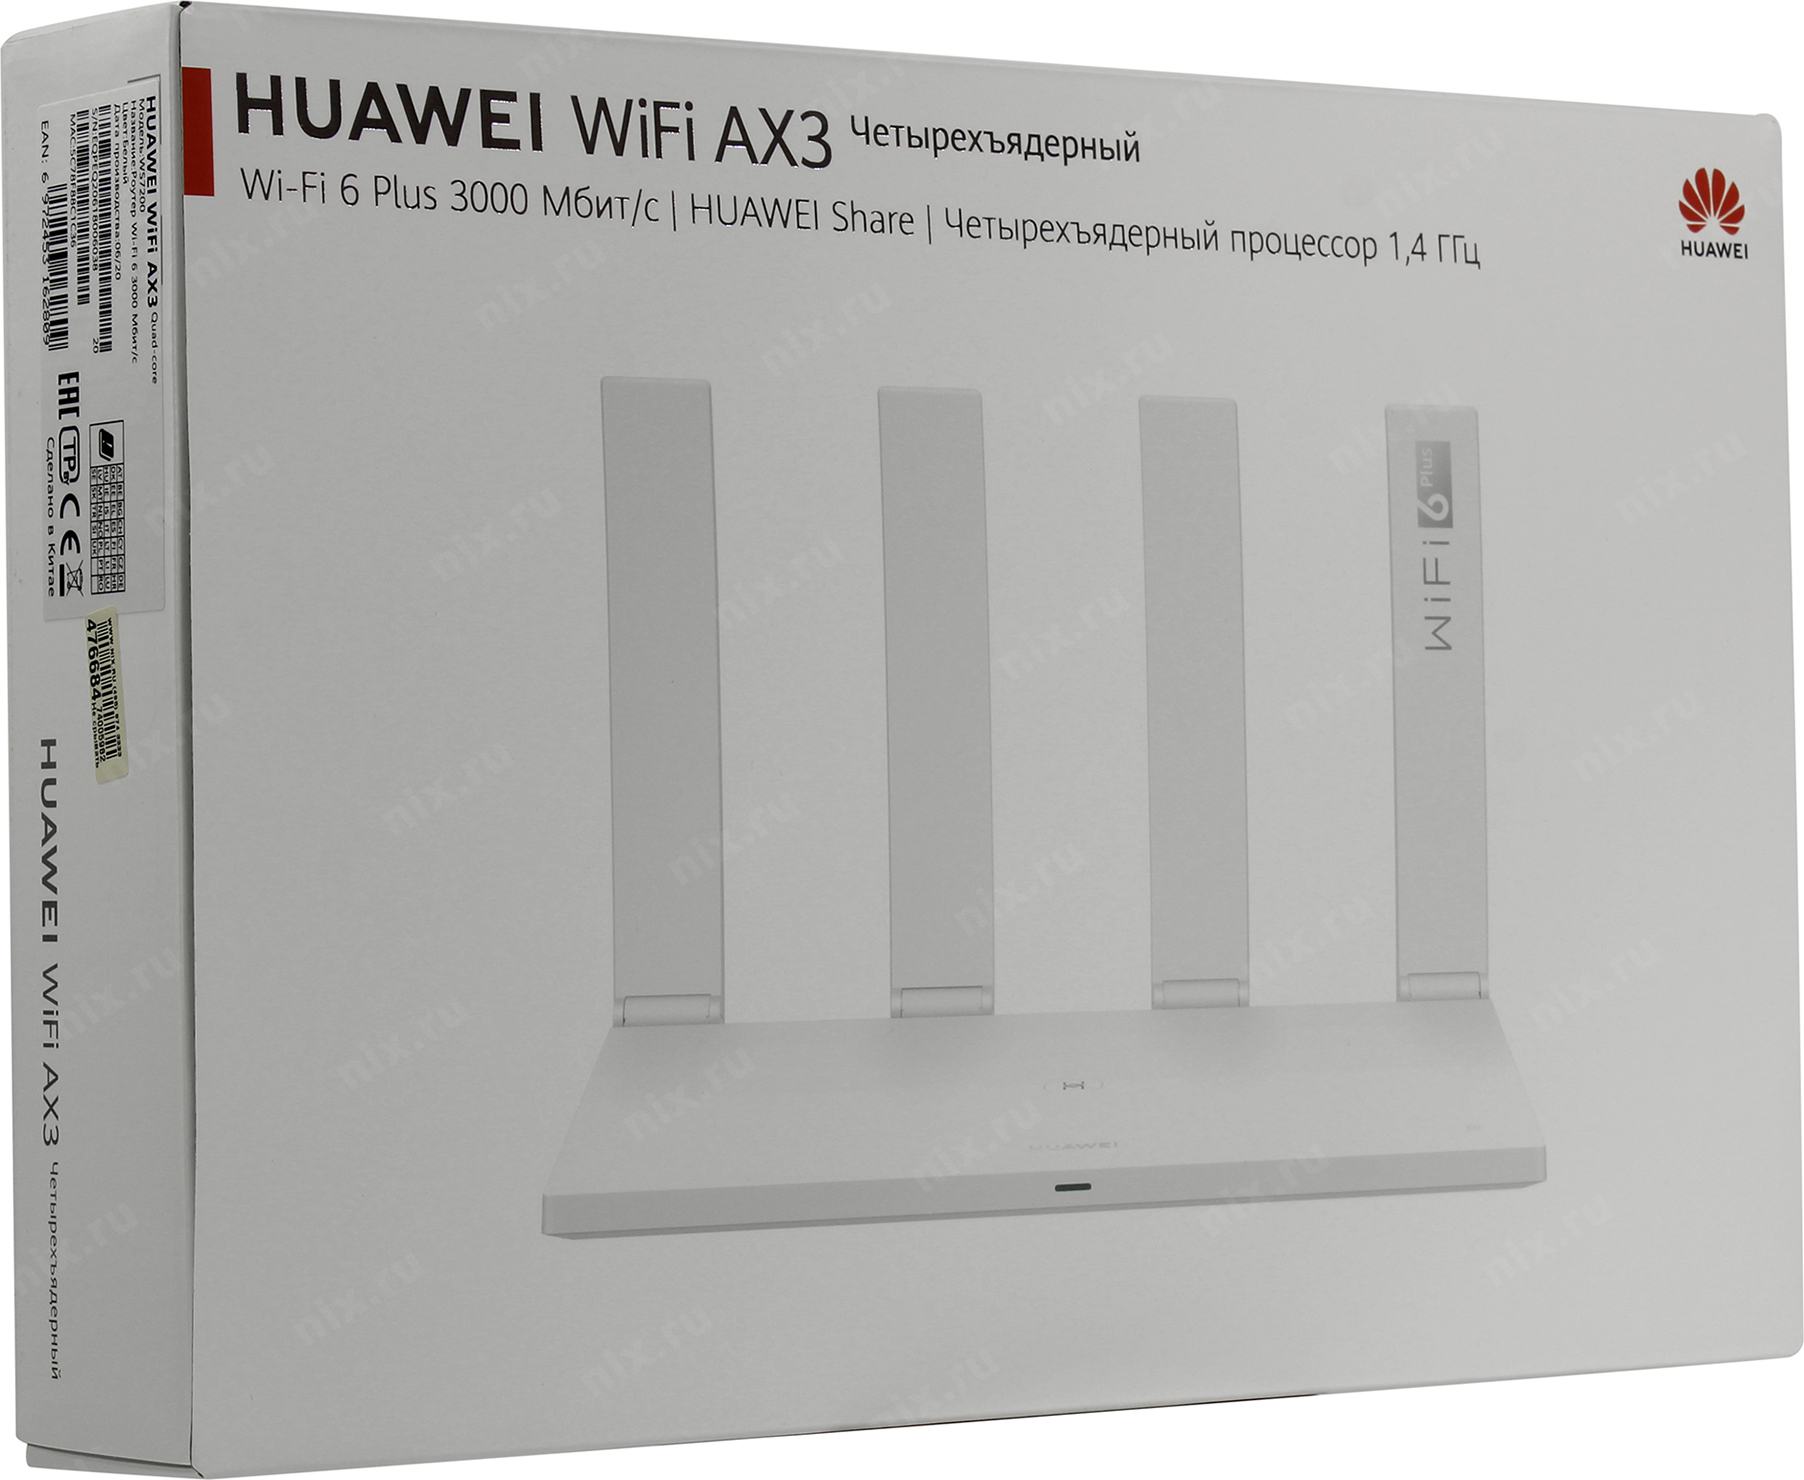 Huawei ax3 купить. Wi-Fi роутер Huawei ws7200 (ax3 Quad-Core). Роутер Huawei WIFI ax3. Huawei WIFI ax3 (Quad-Core). Роутер Huawei ax3 Quad Core Wi-Fi 6.